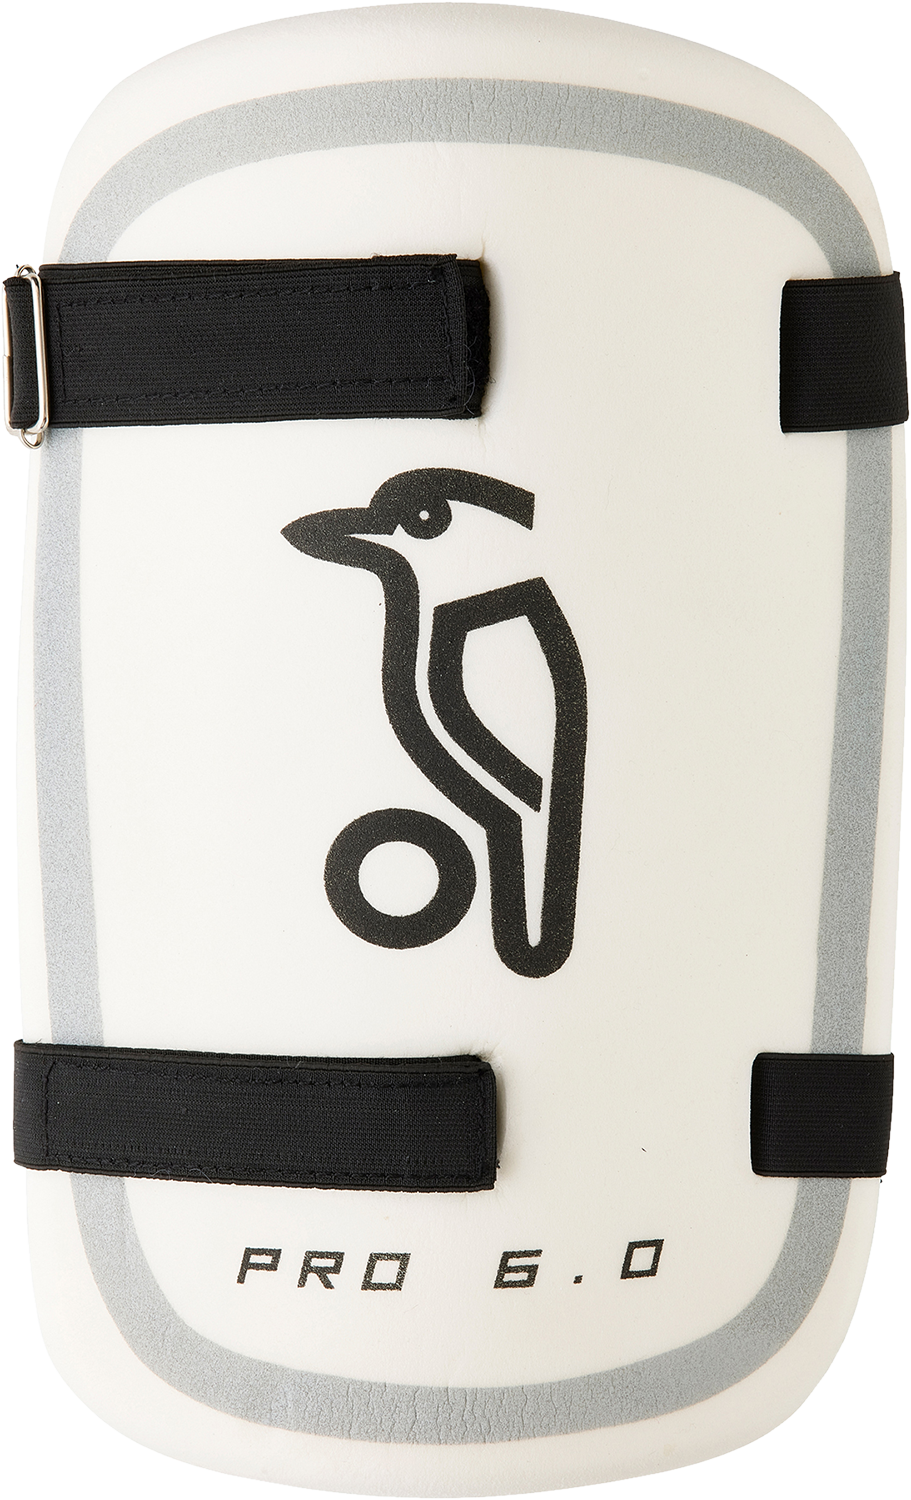 Kookaburra-Pro-6.0-Thigh-Pad